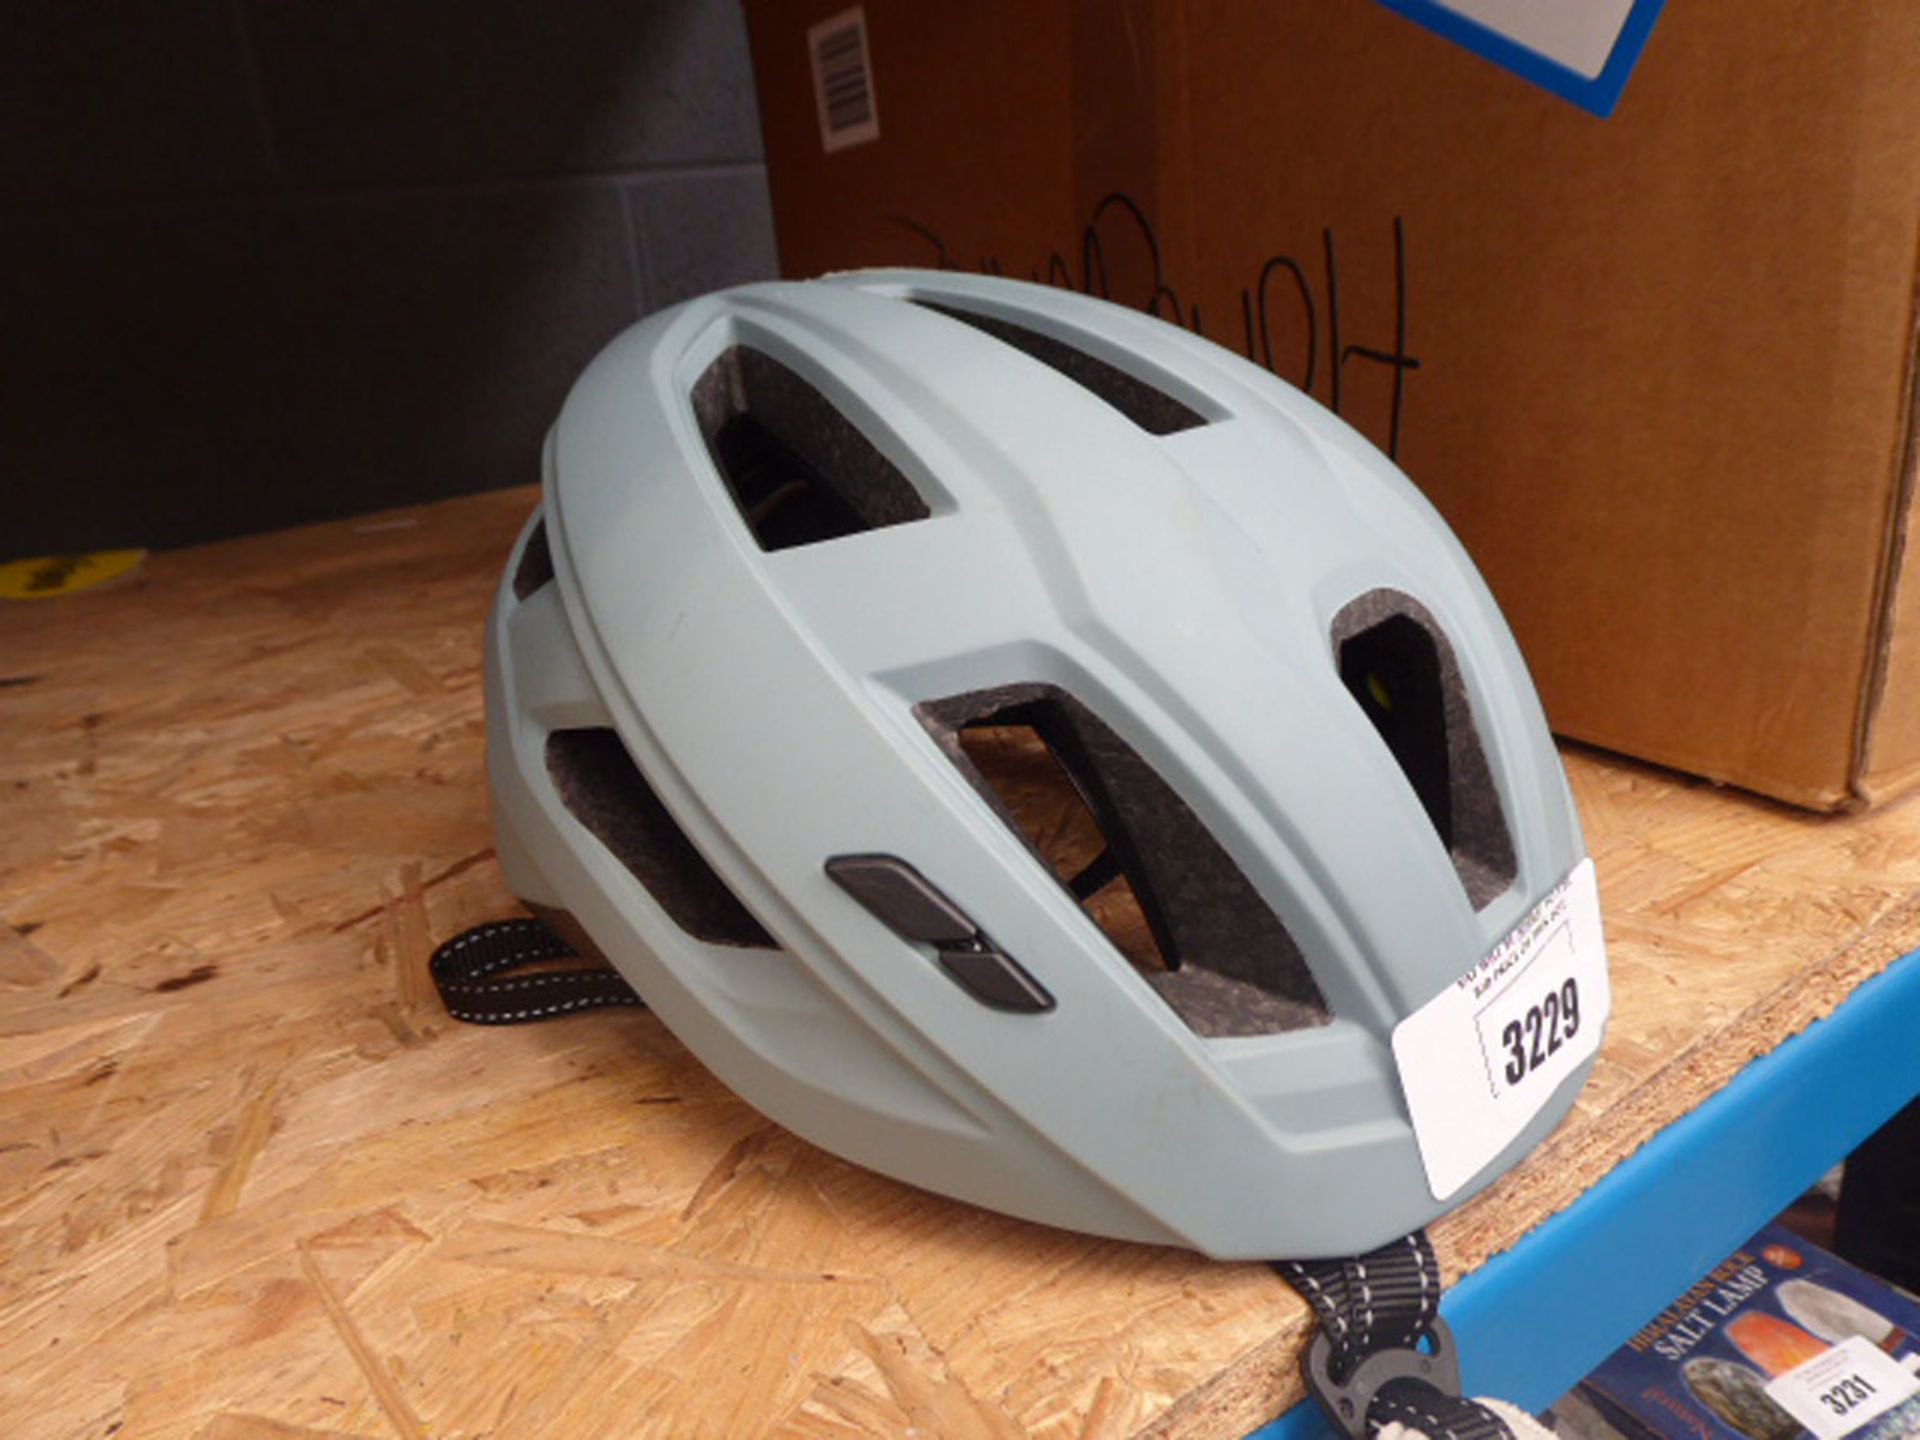 Light blue cycle helmet